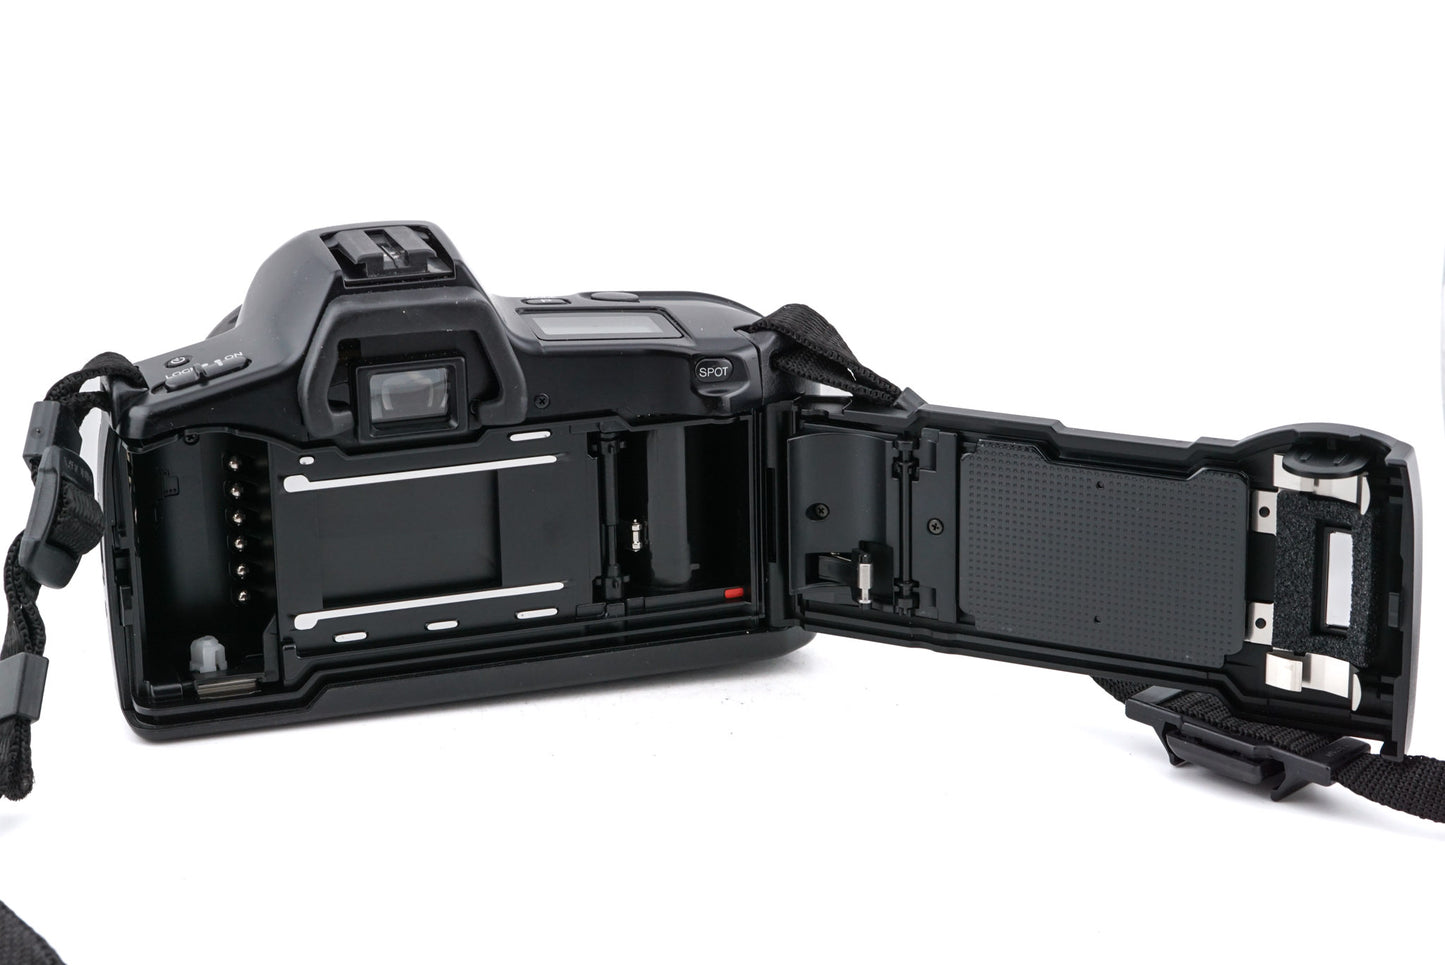 Minolta Dynax SPxi + 35-80mm f4-5.6 Power Zoom AF